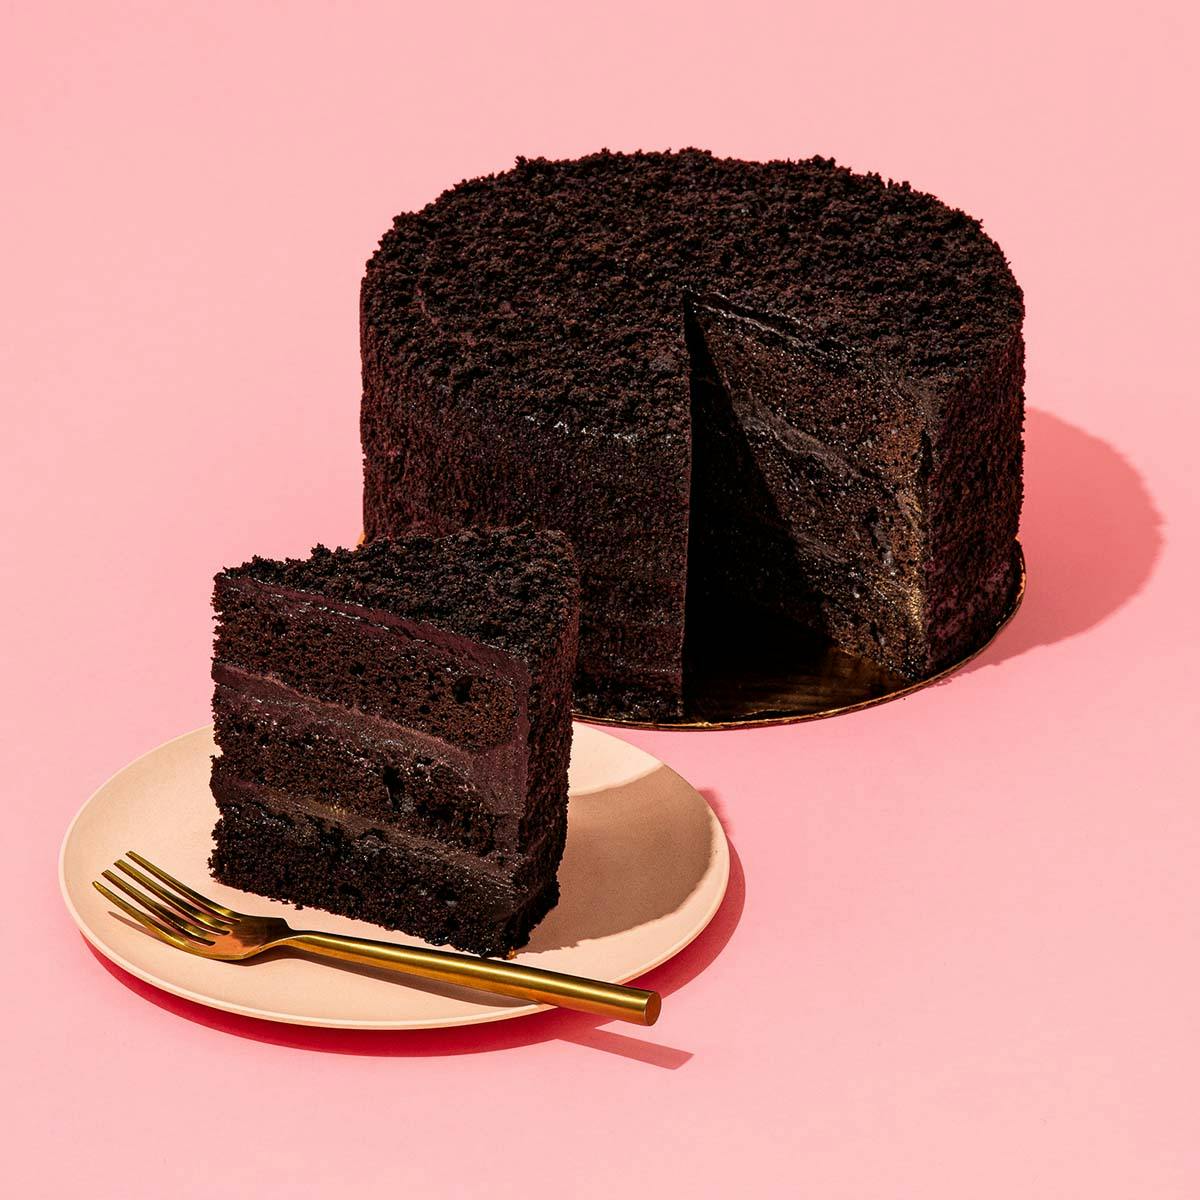 Discover 135+ blackout cake